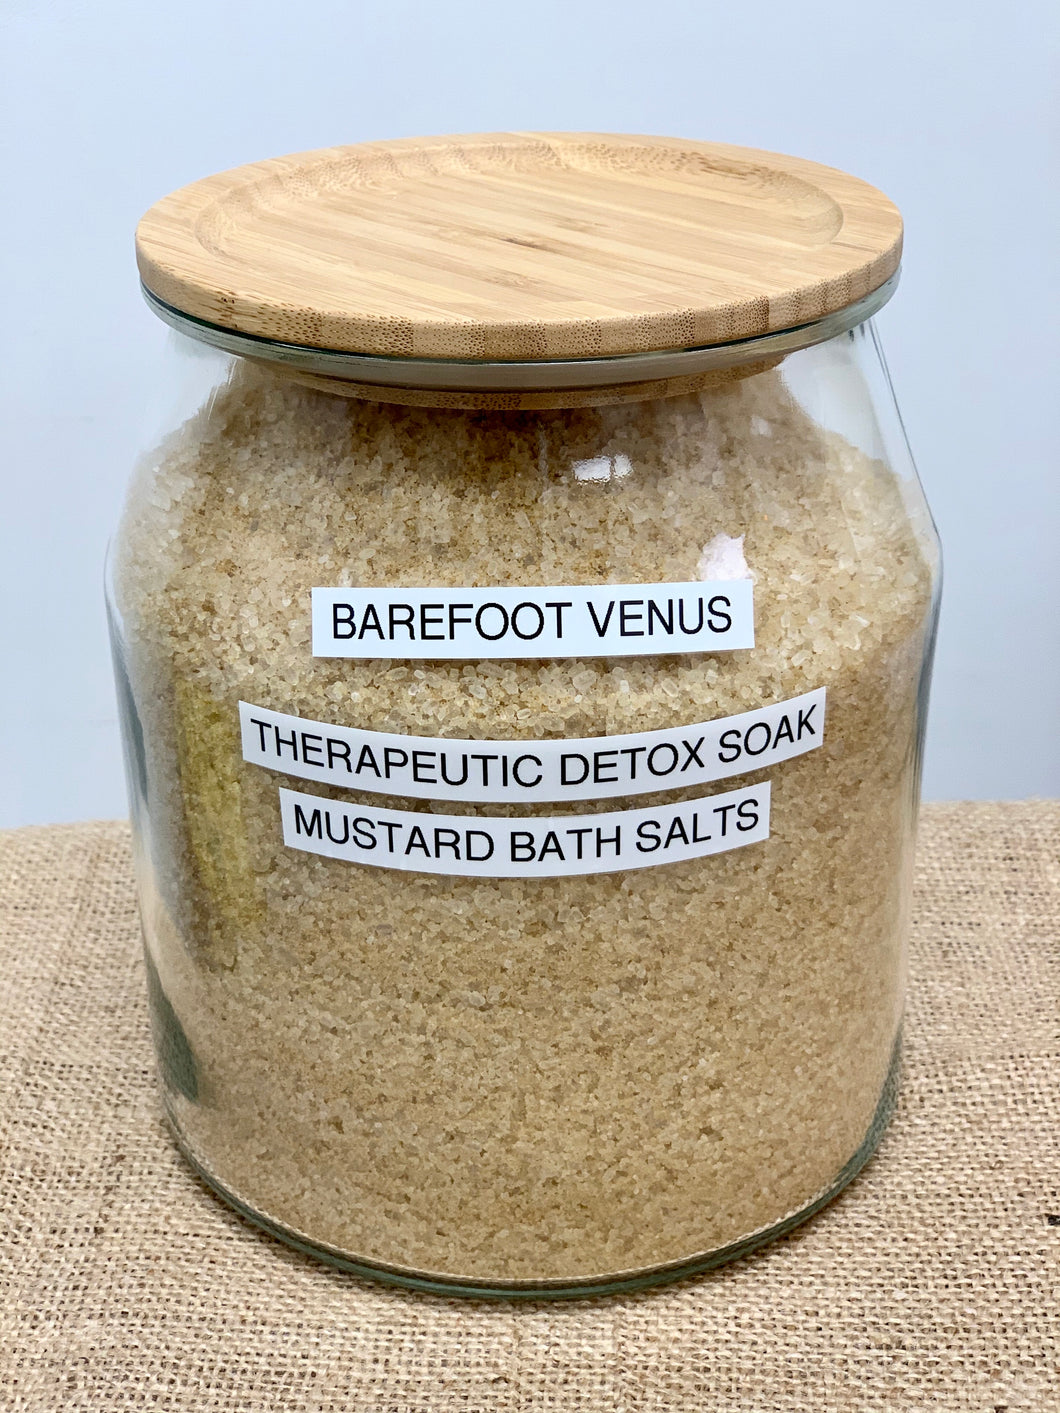 Mustard Bath Salts by Barefoot Venus (10g)